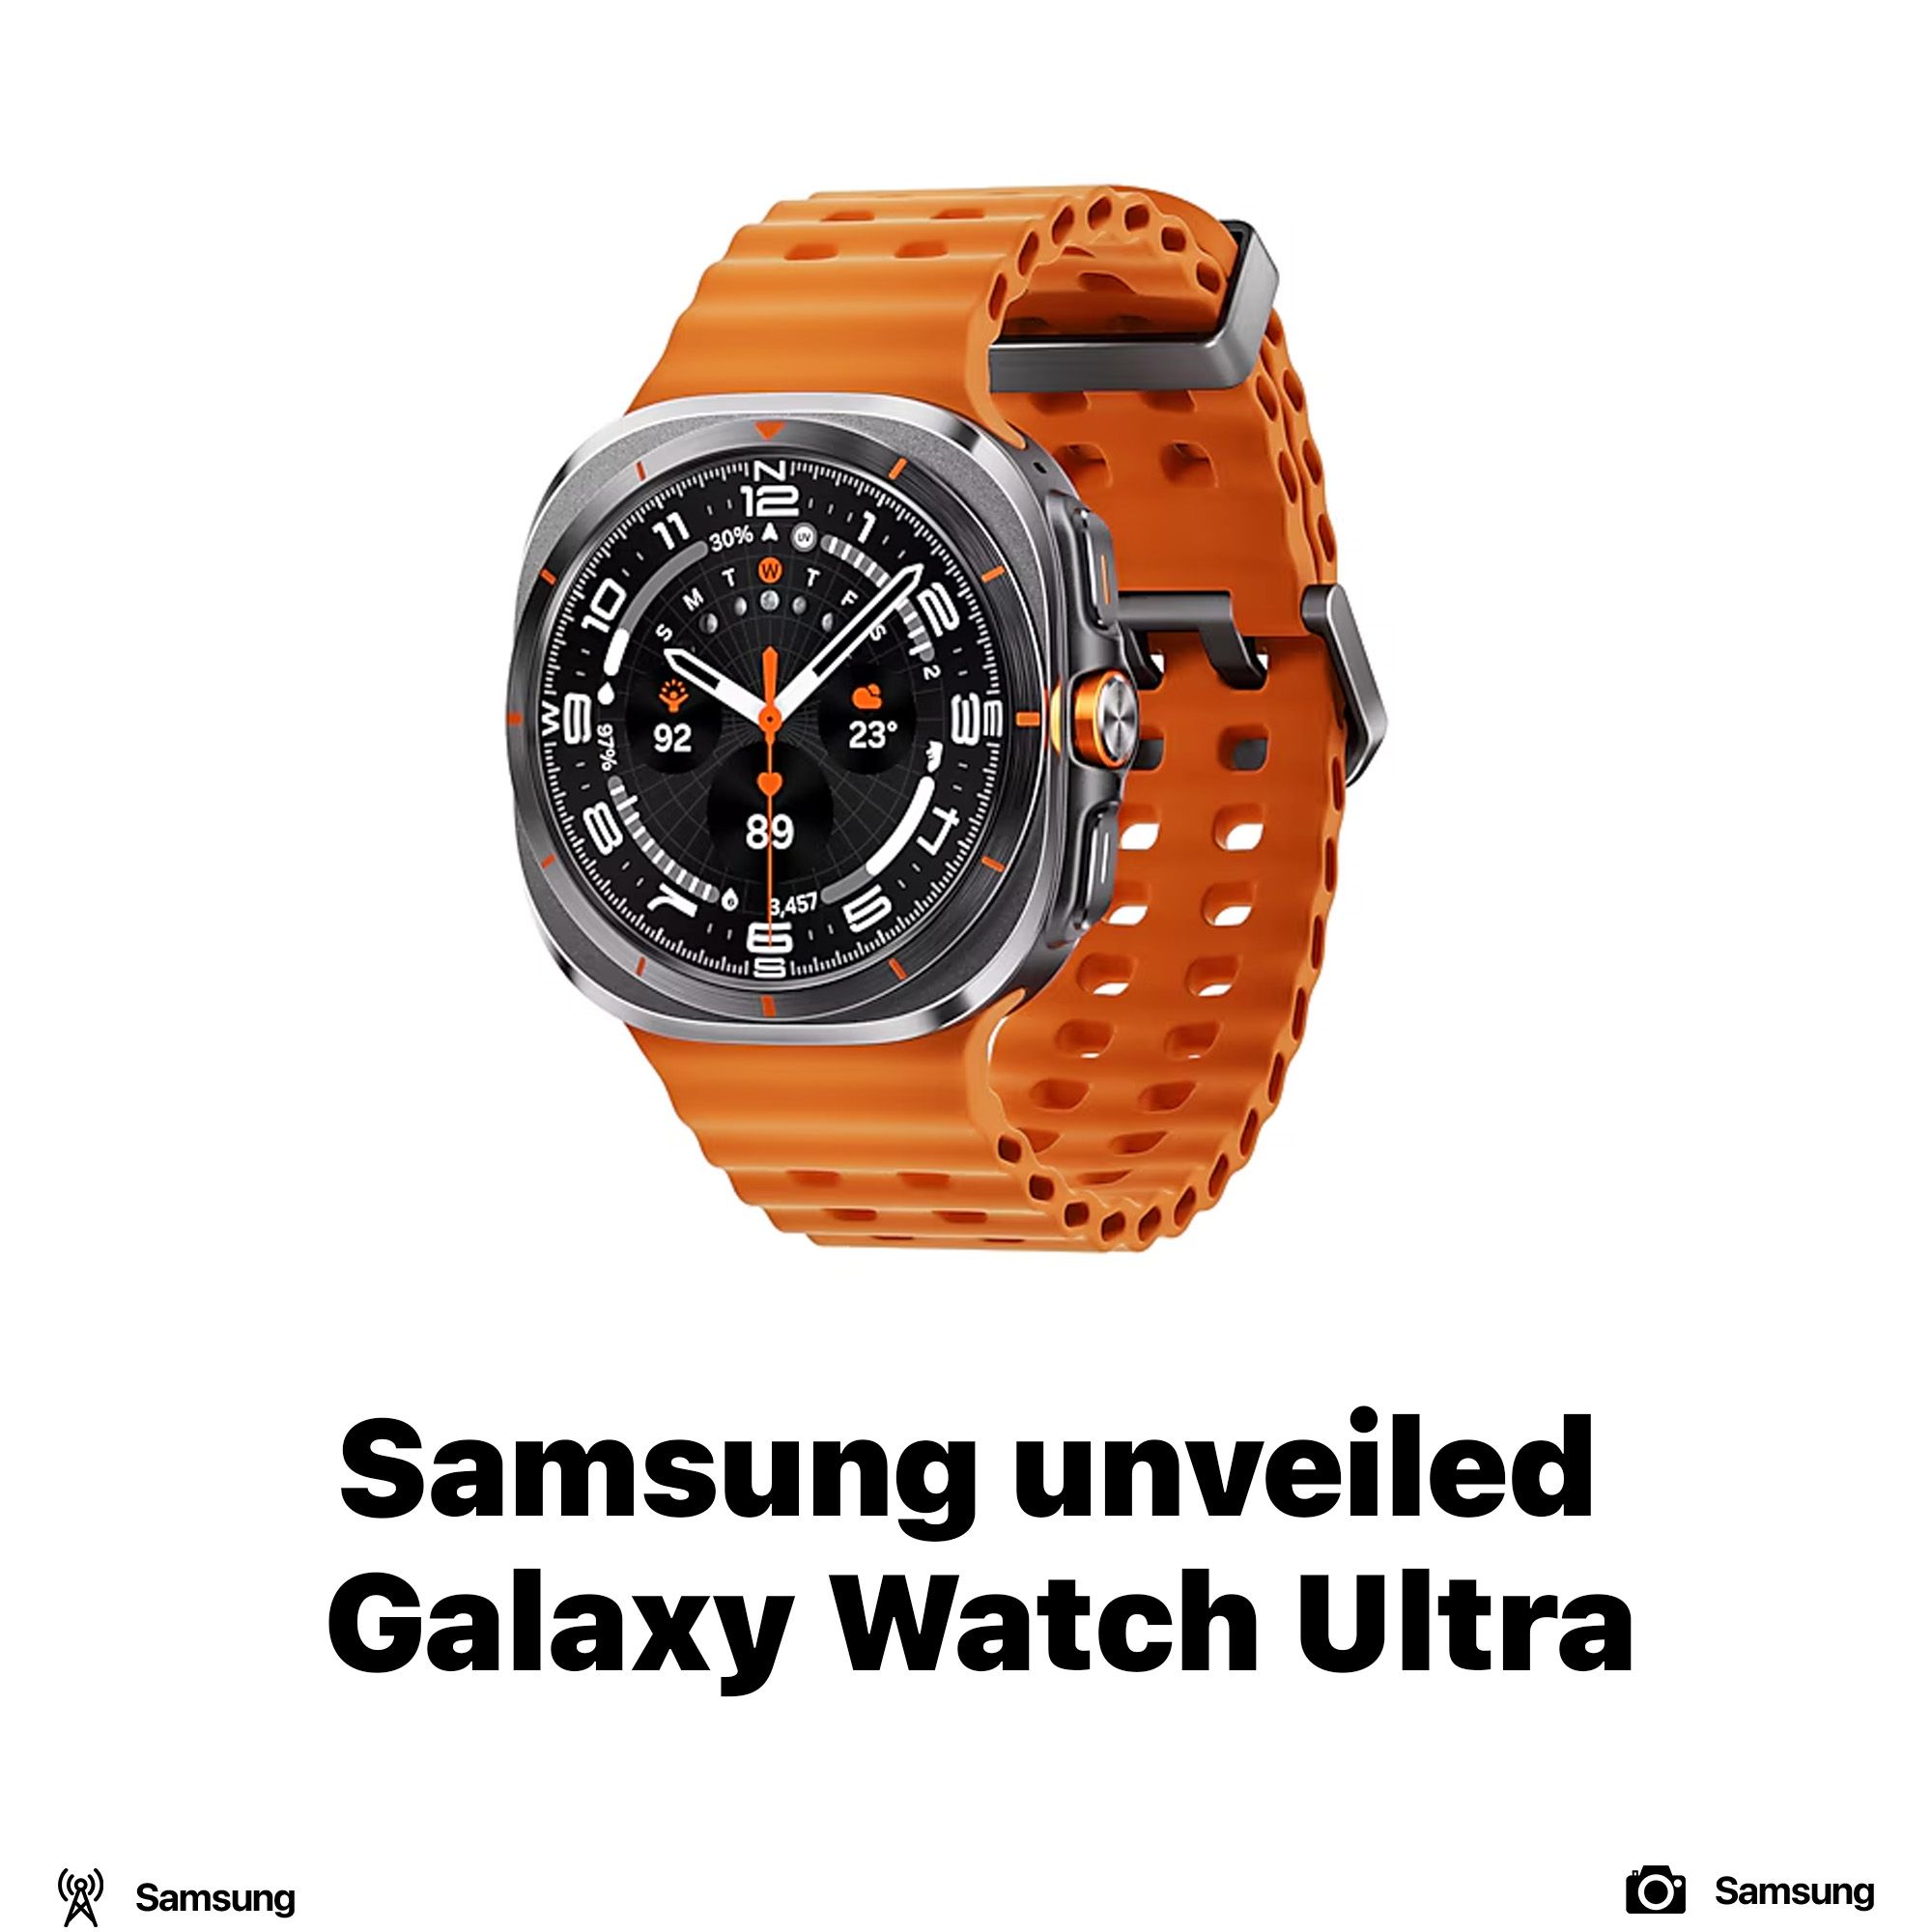 Samsung unveiled Galaxy Watch Ultra